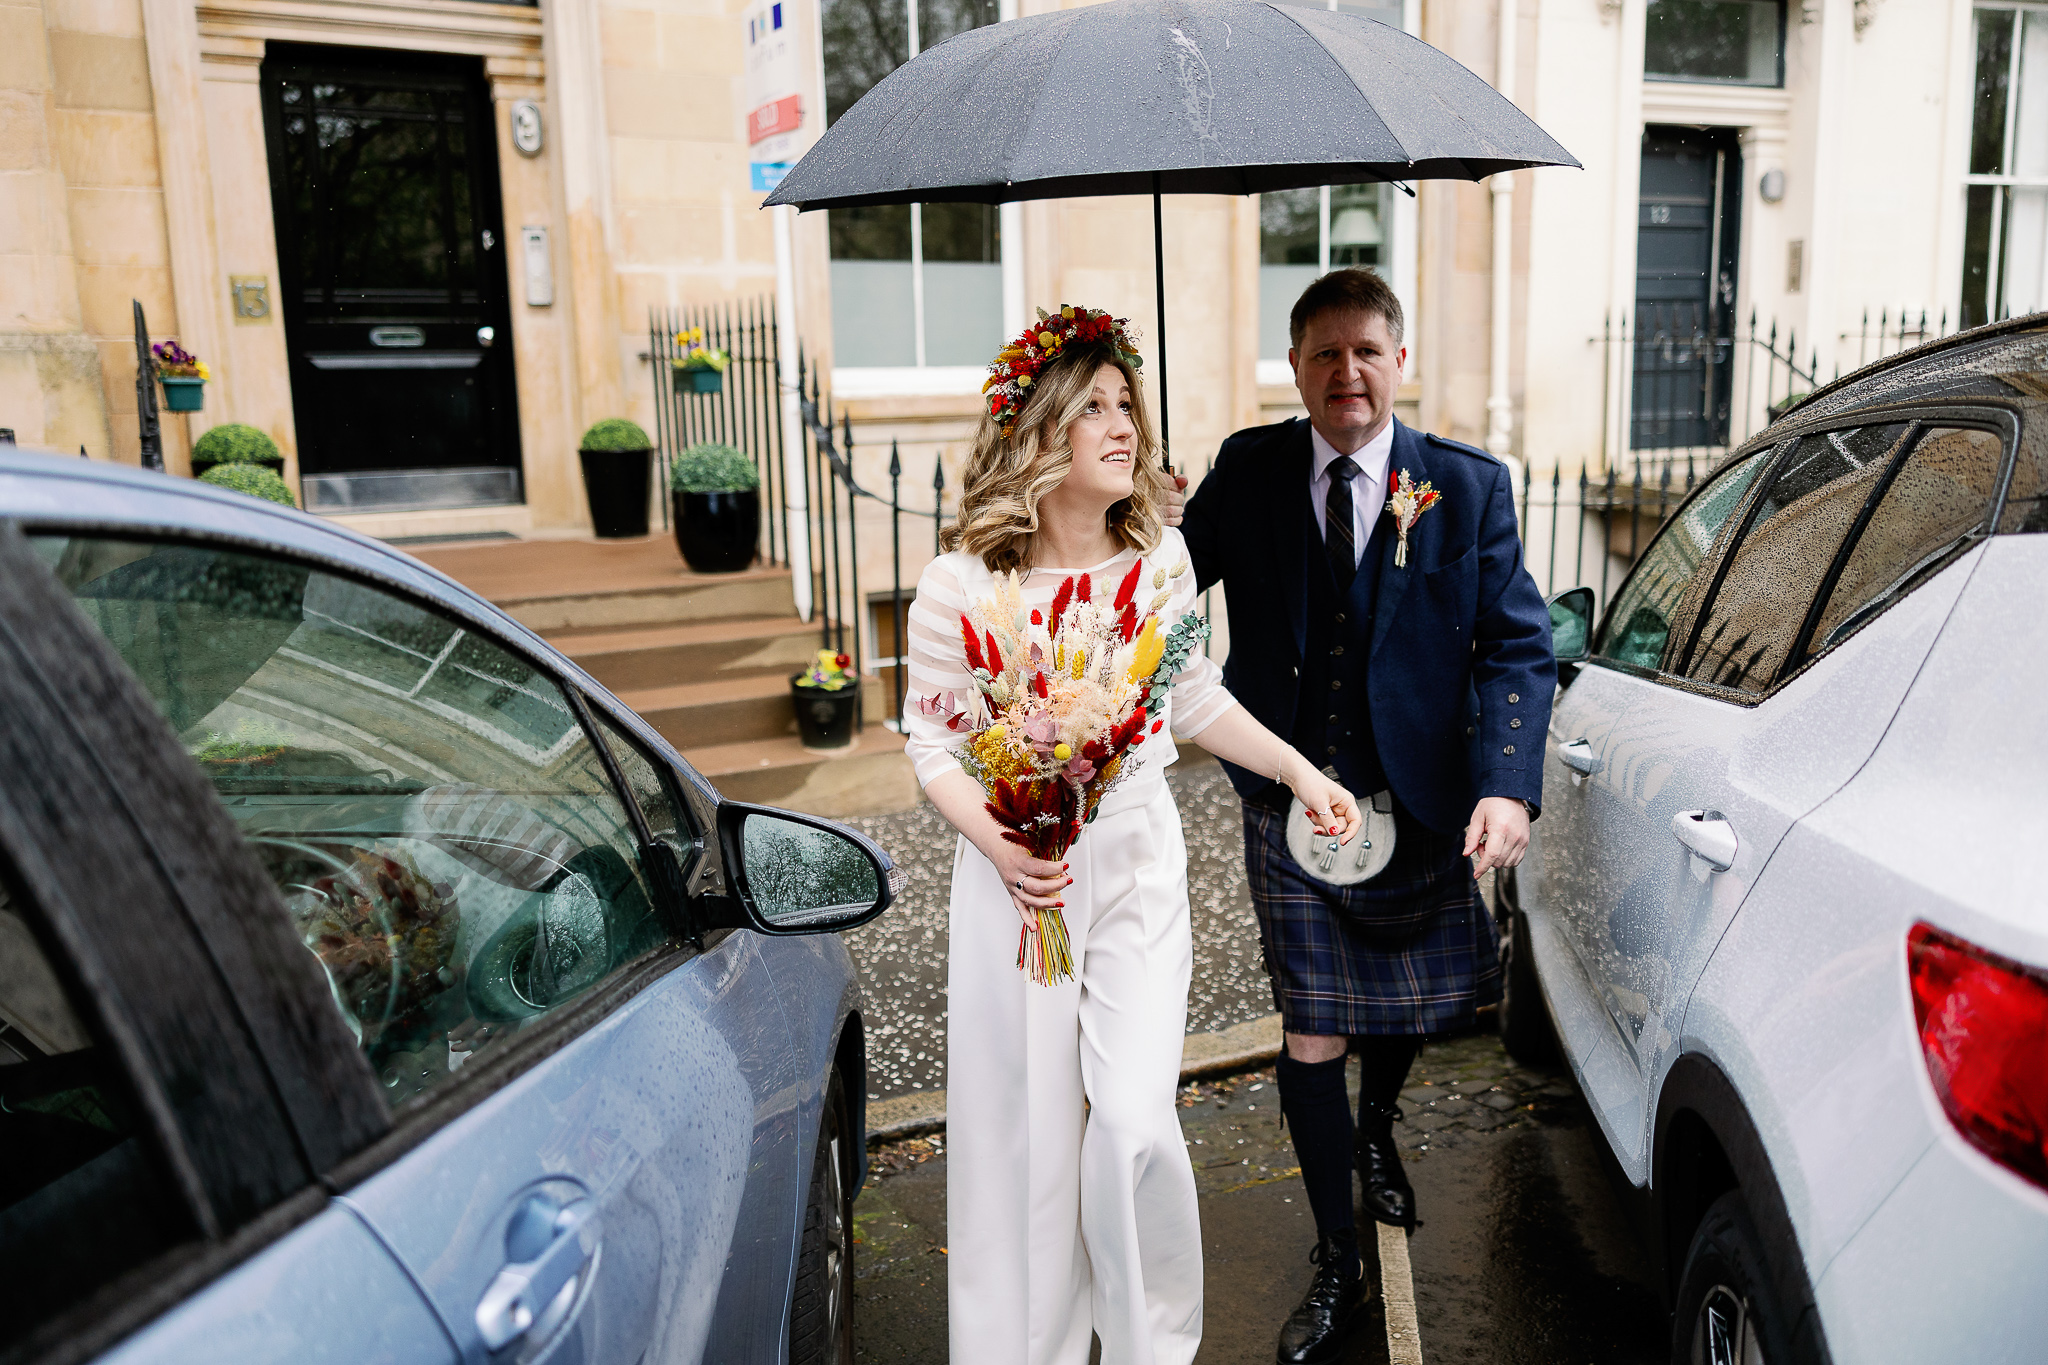 Rain on your wedding day 